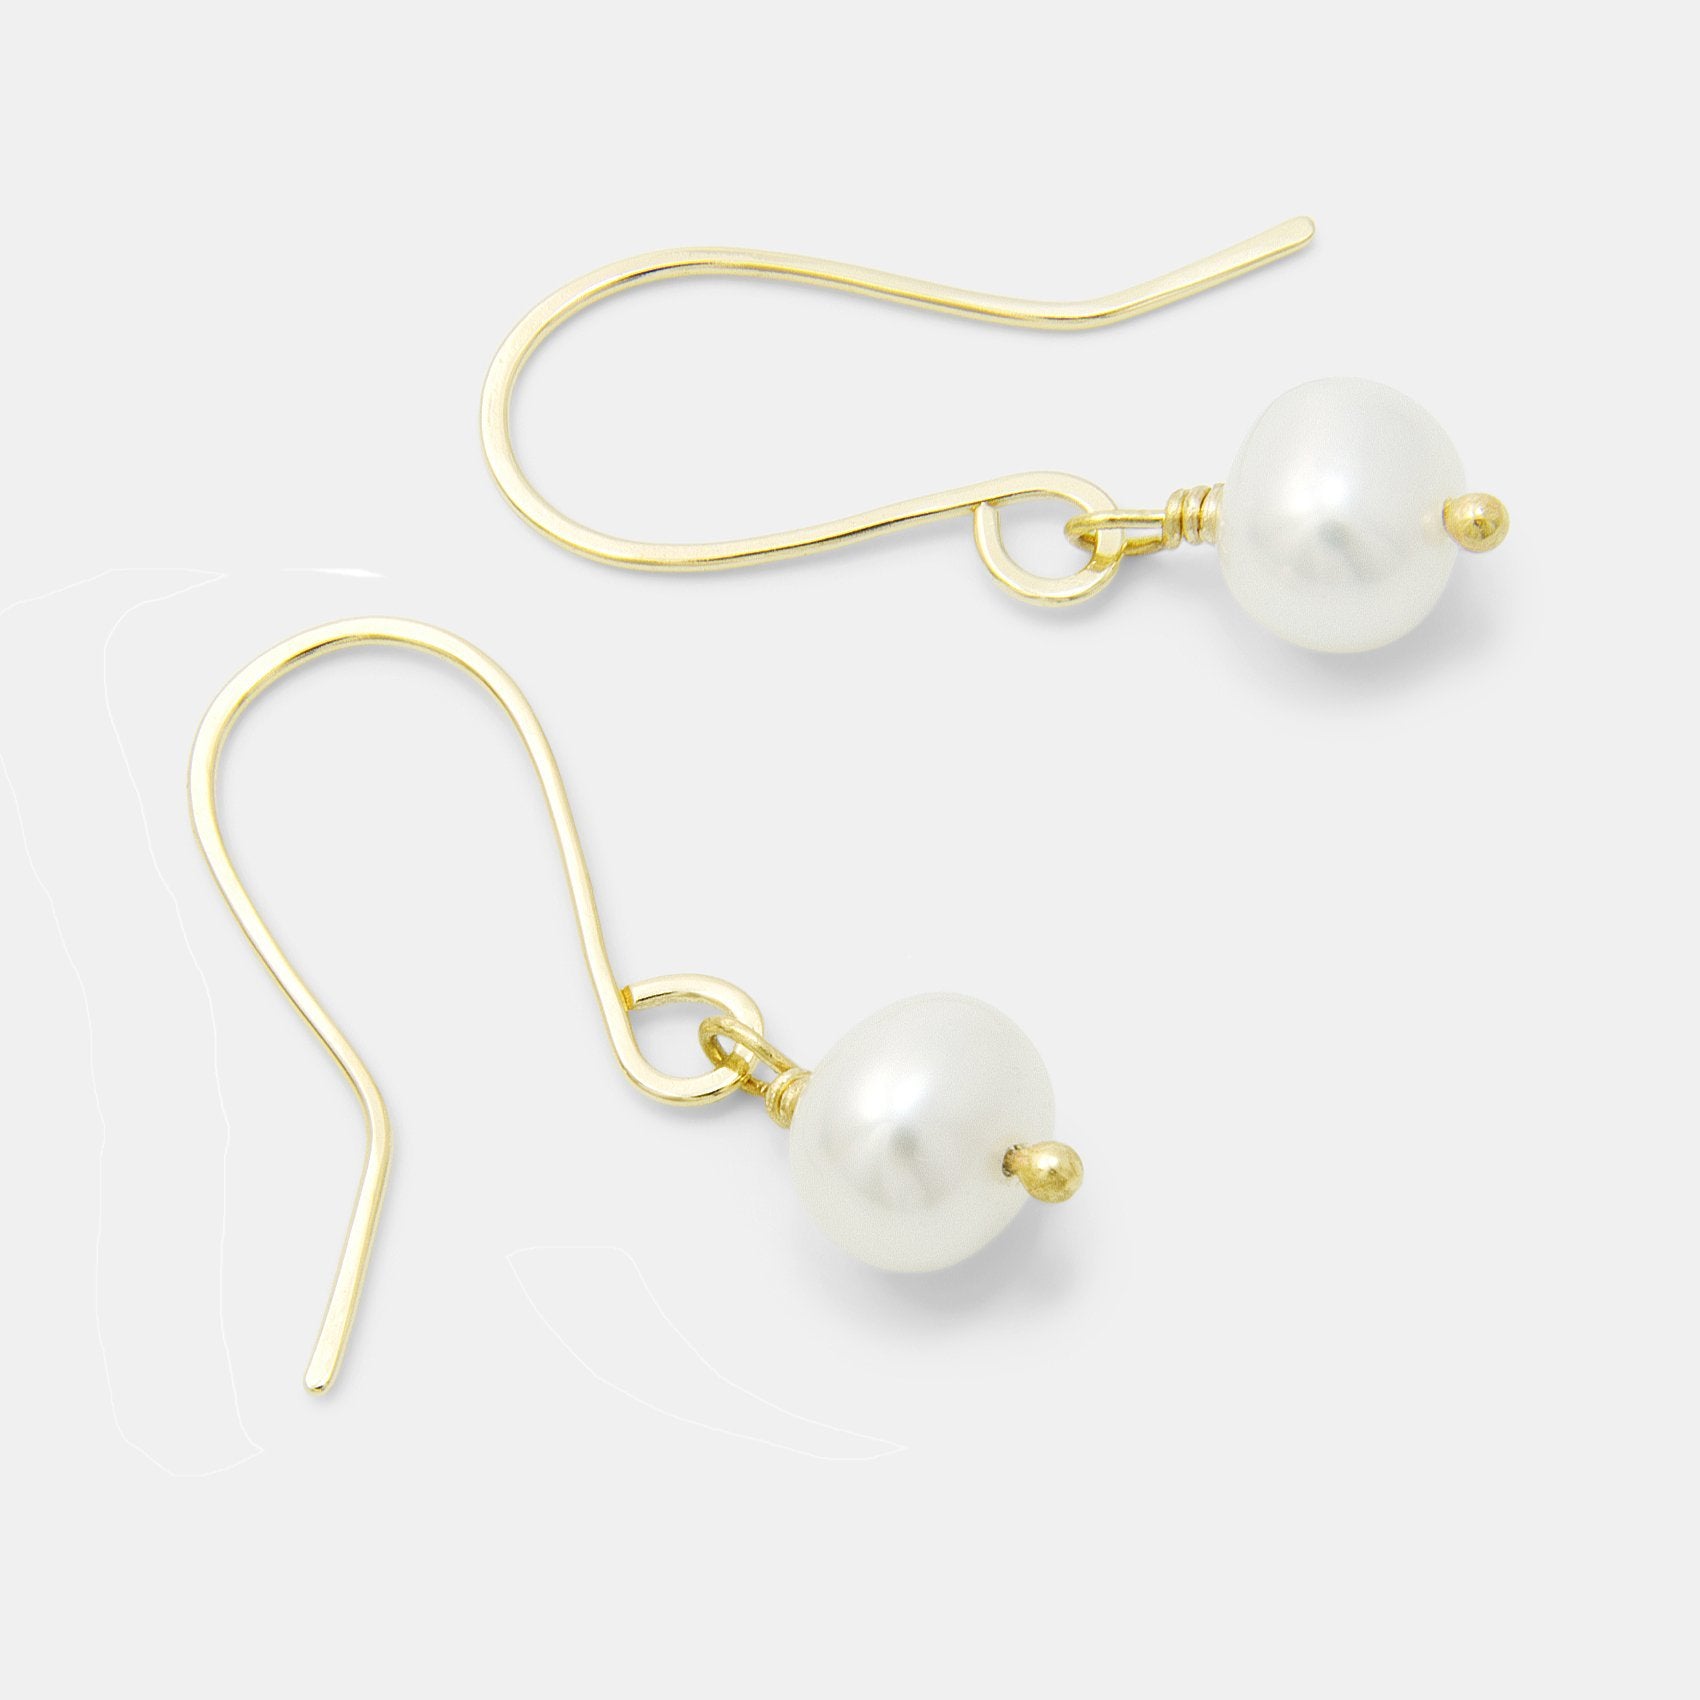 Pearl & solid gold drop earrings - Simone Walsh Jewellery Australia